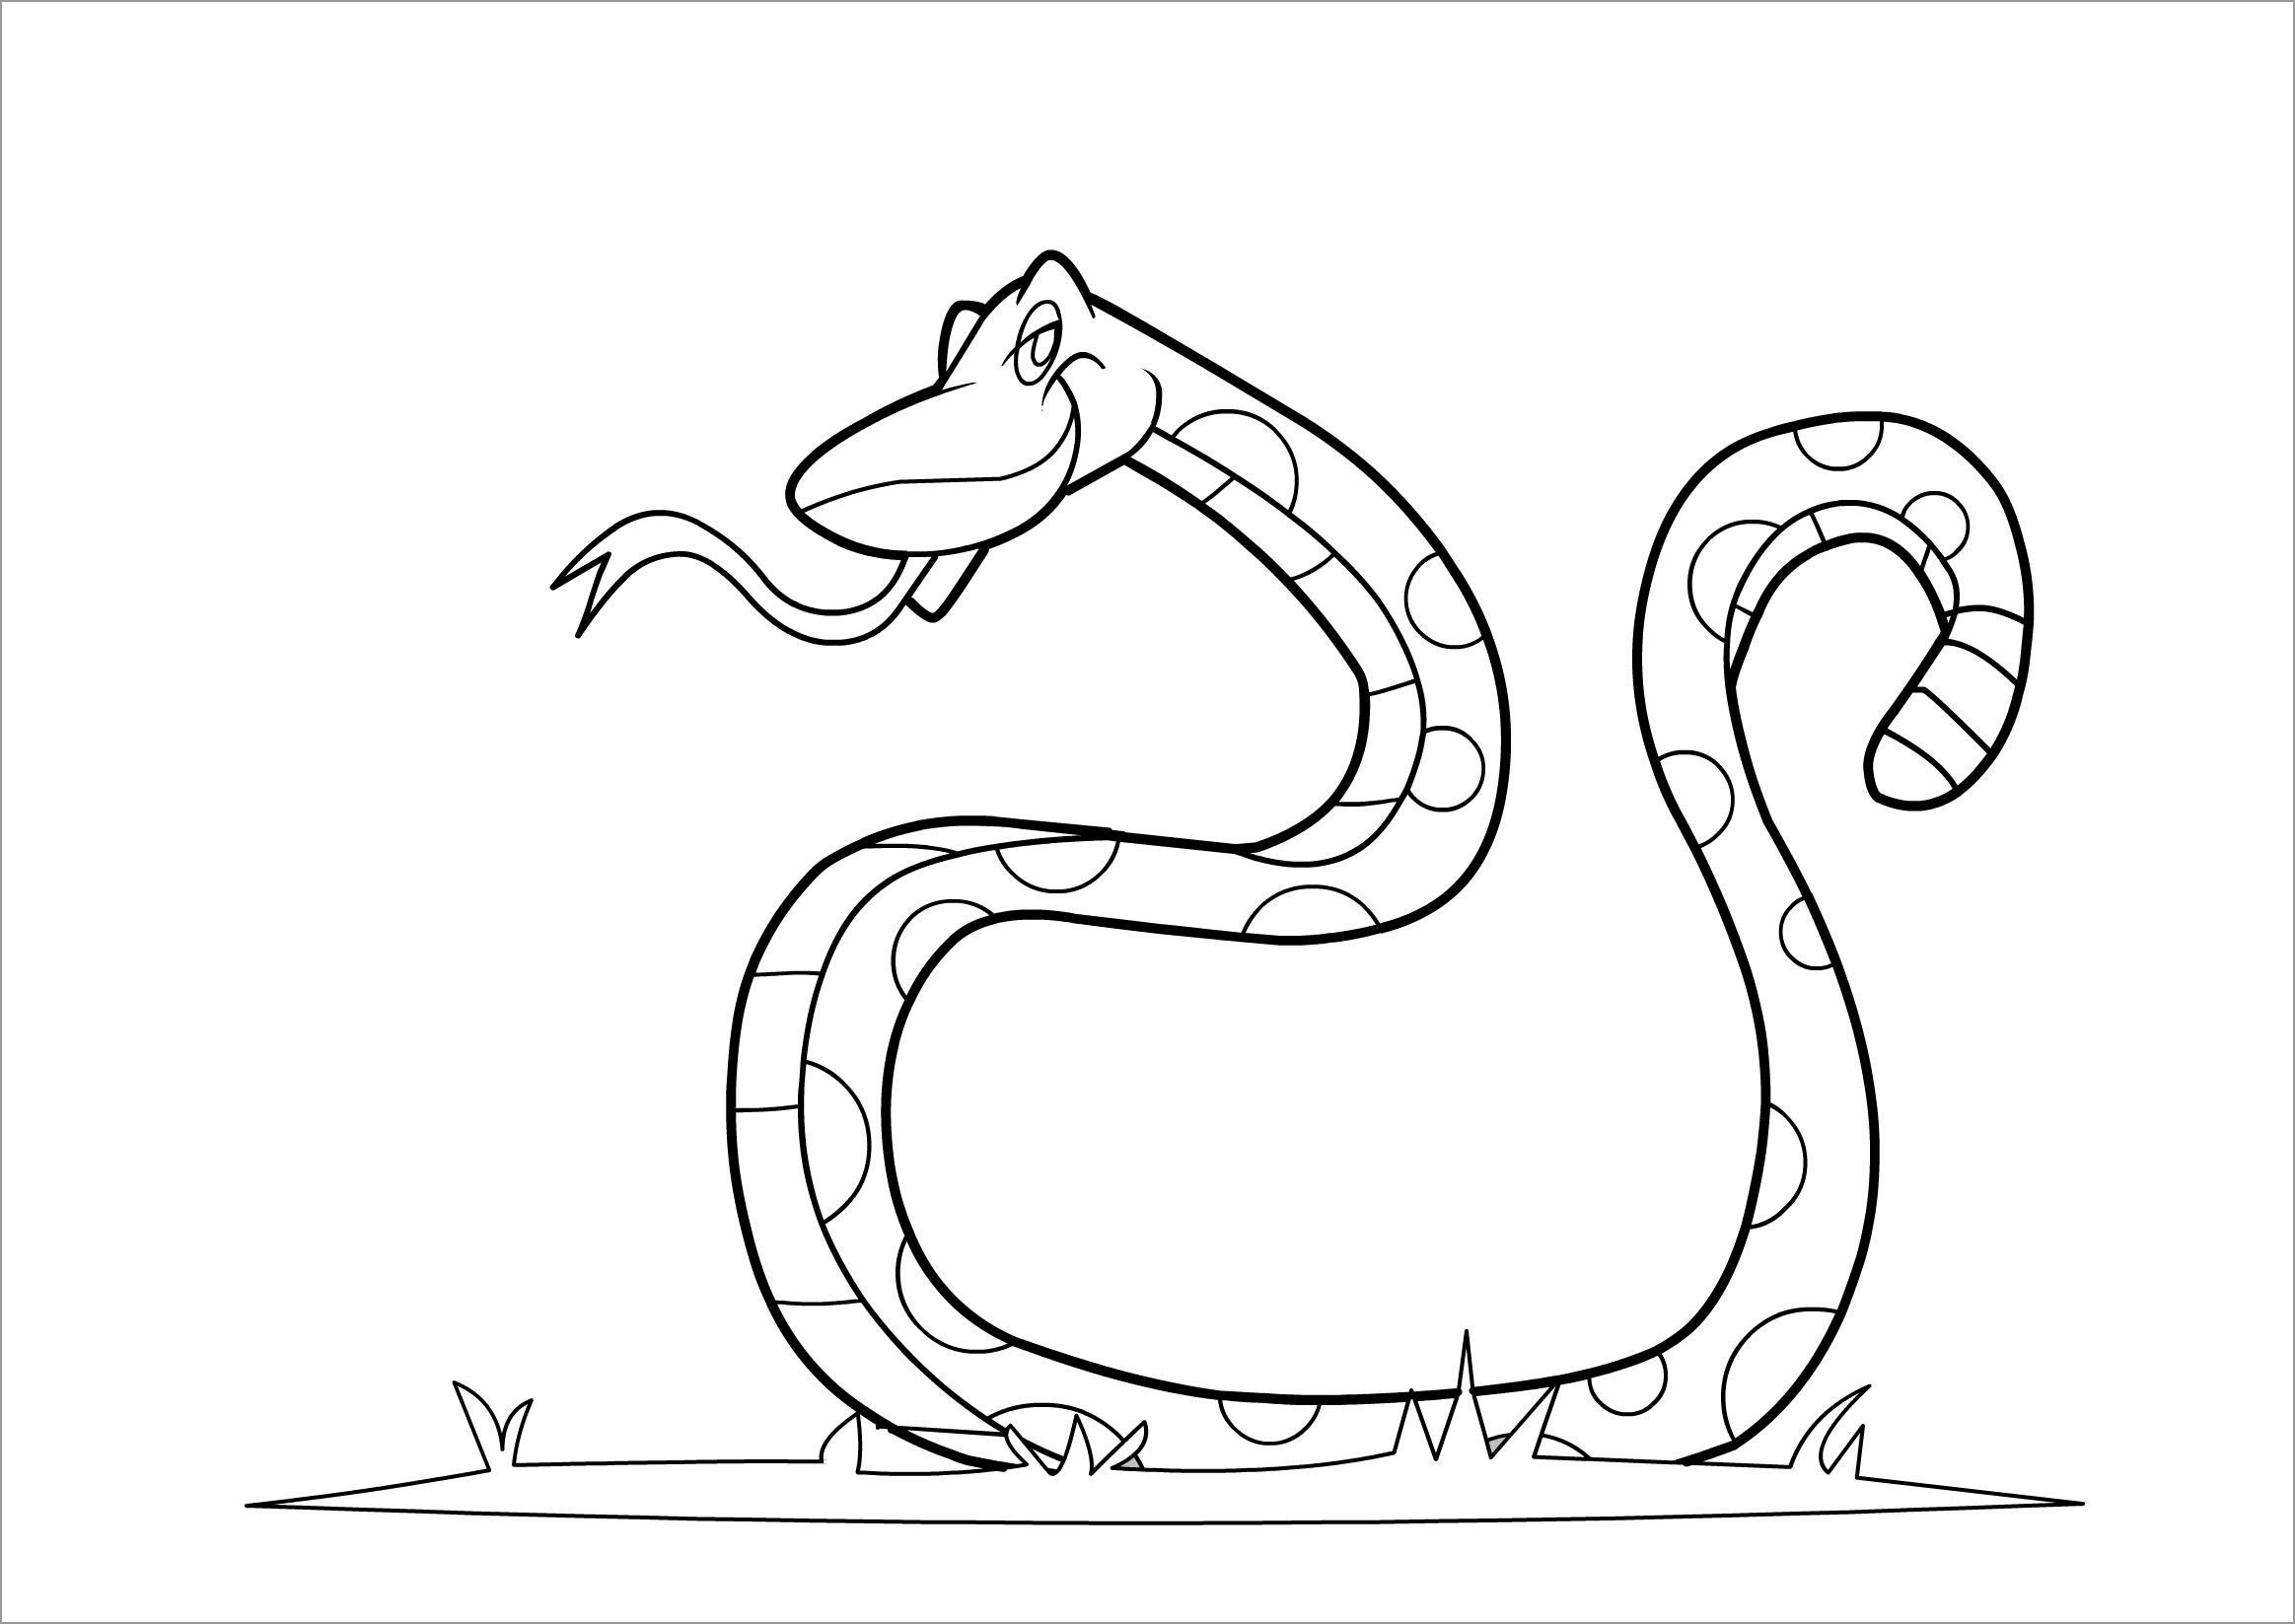 Printable Snake Coloring Page